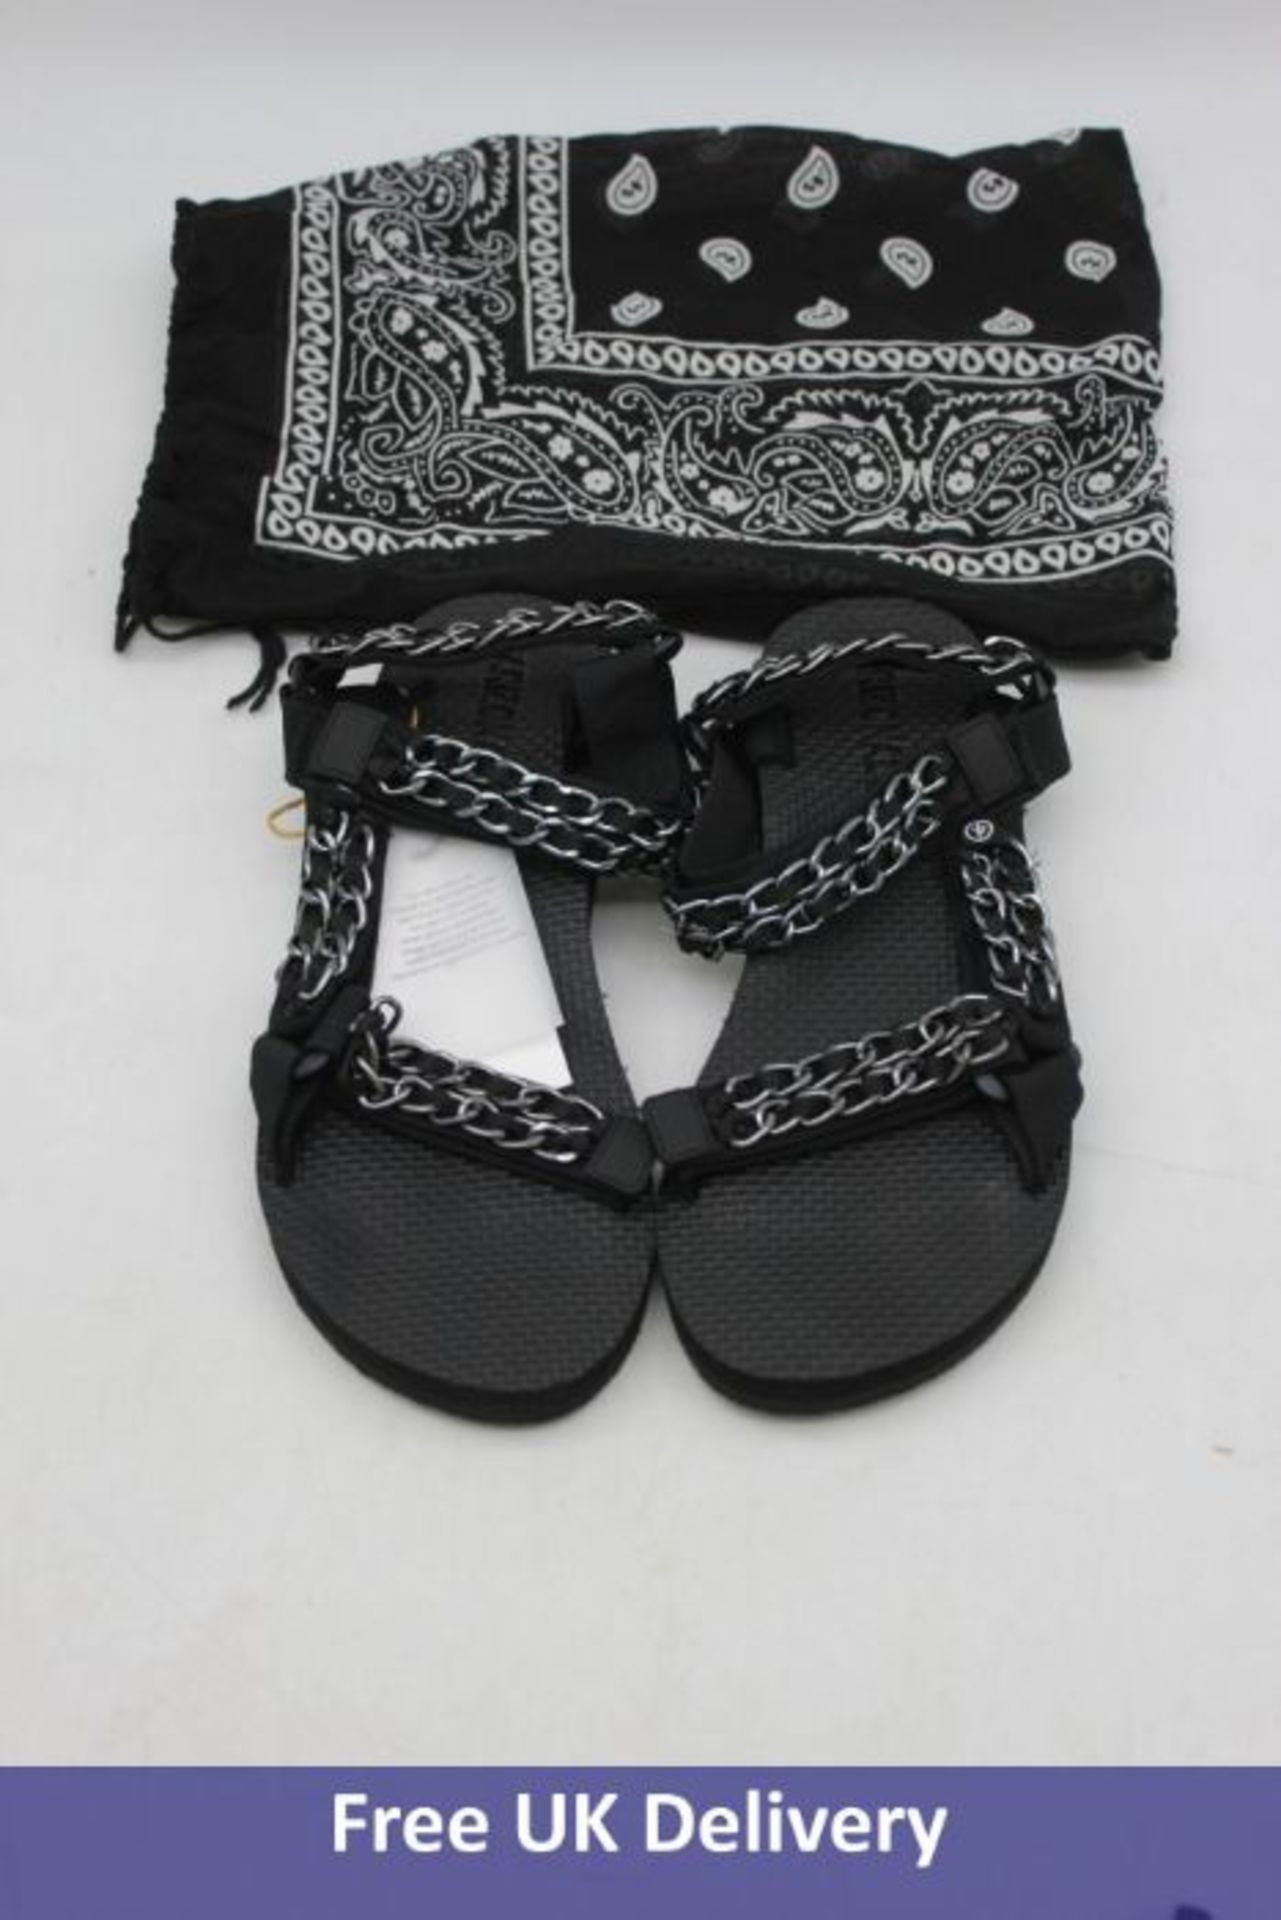 Four Arizona Love, Women's Duo Chain Sandals, Black, UK 6